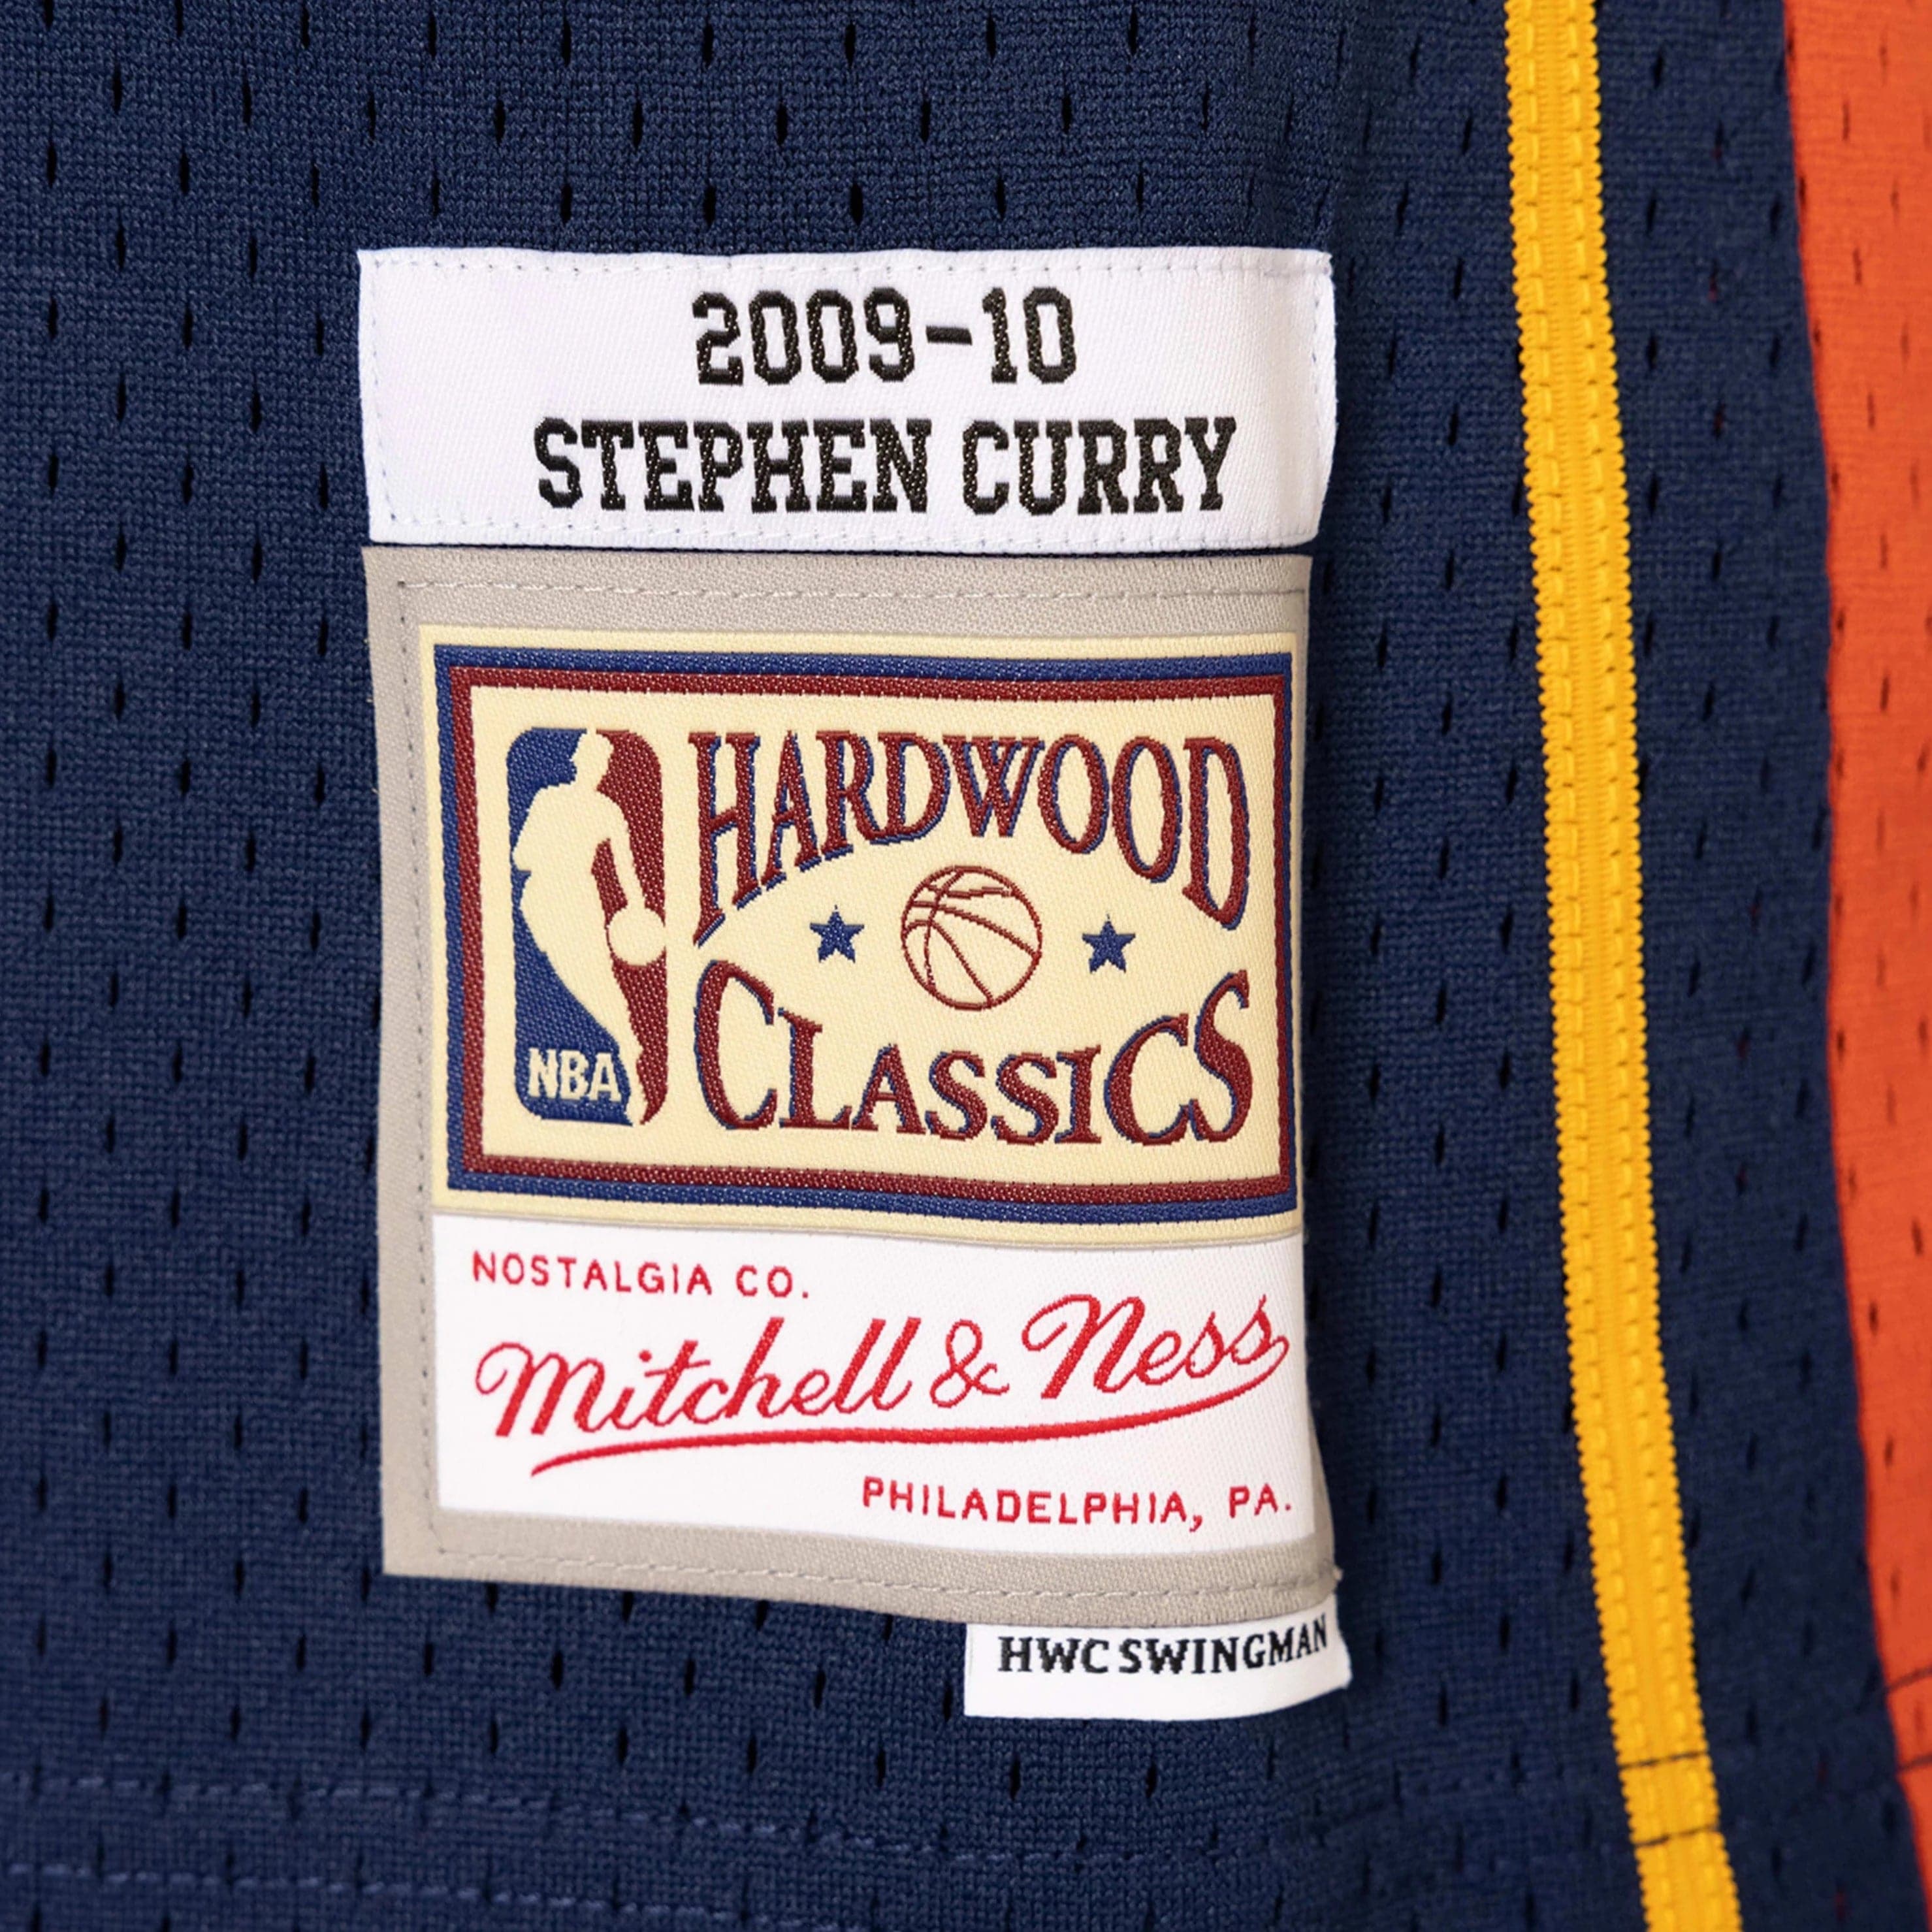 Stephen Curry Golden State Warriors 09-10 HWC Swingman Jersey